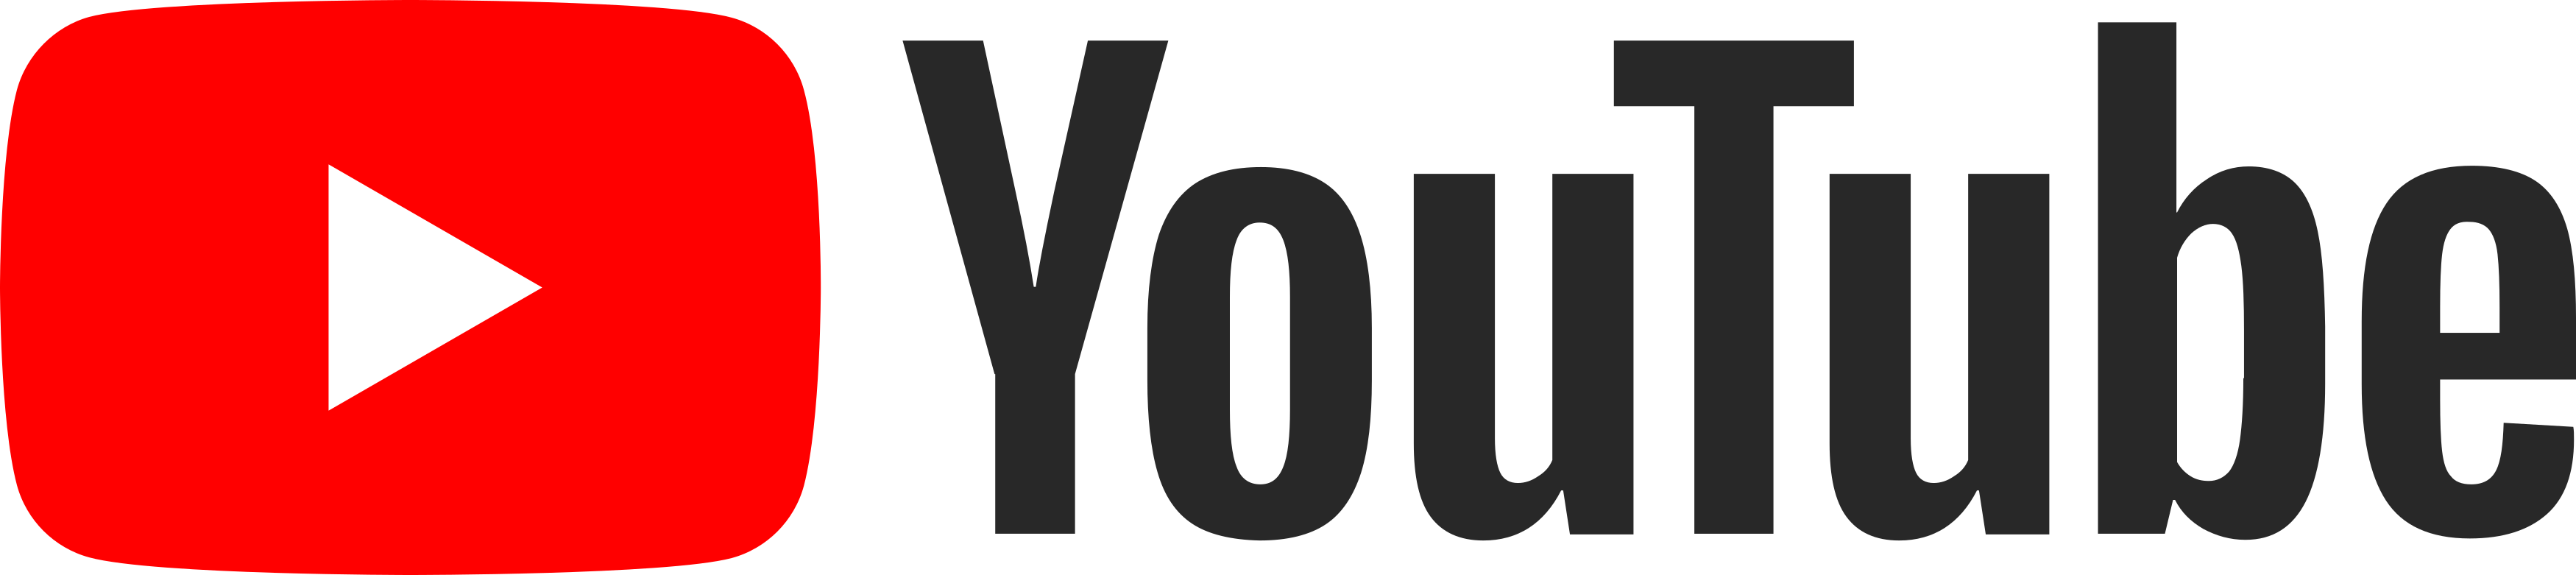 logo youtube png